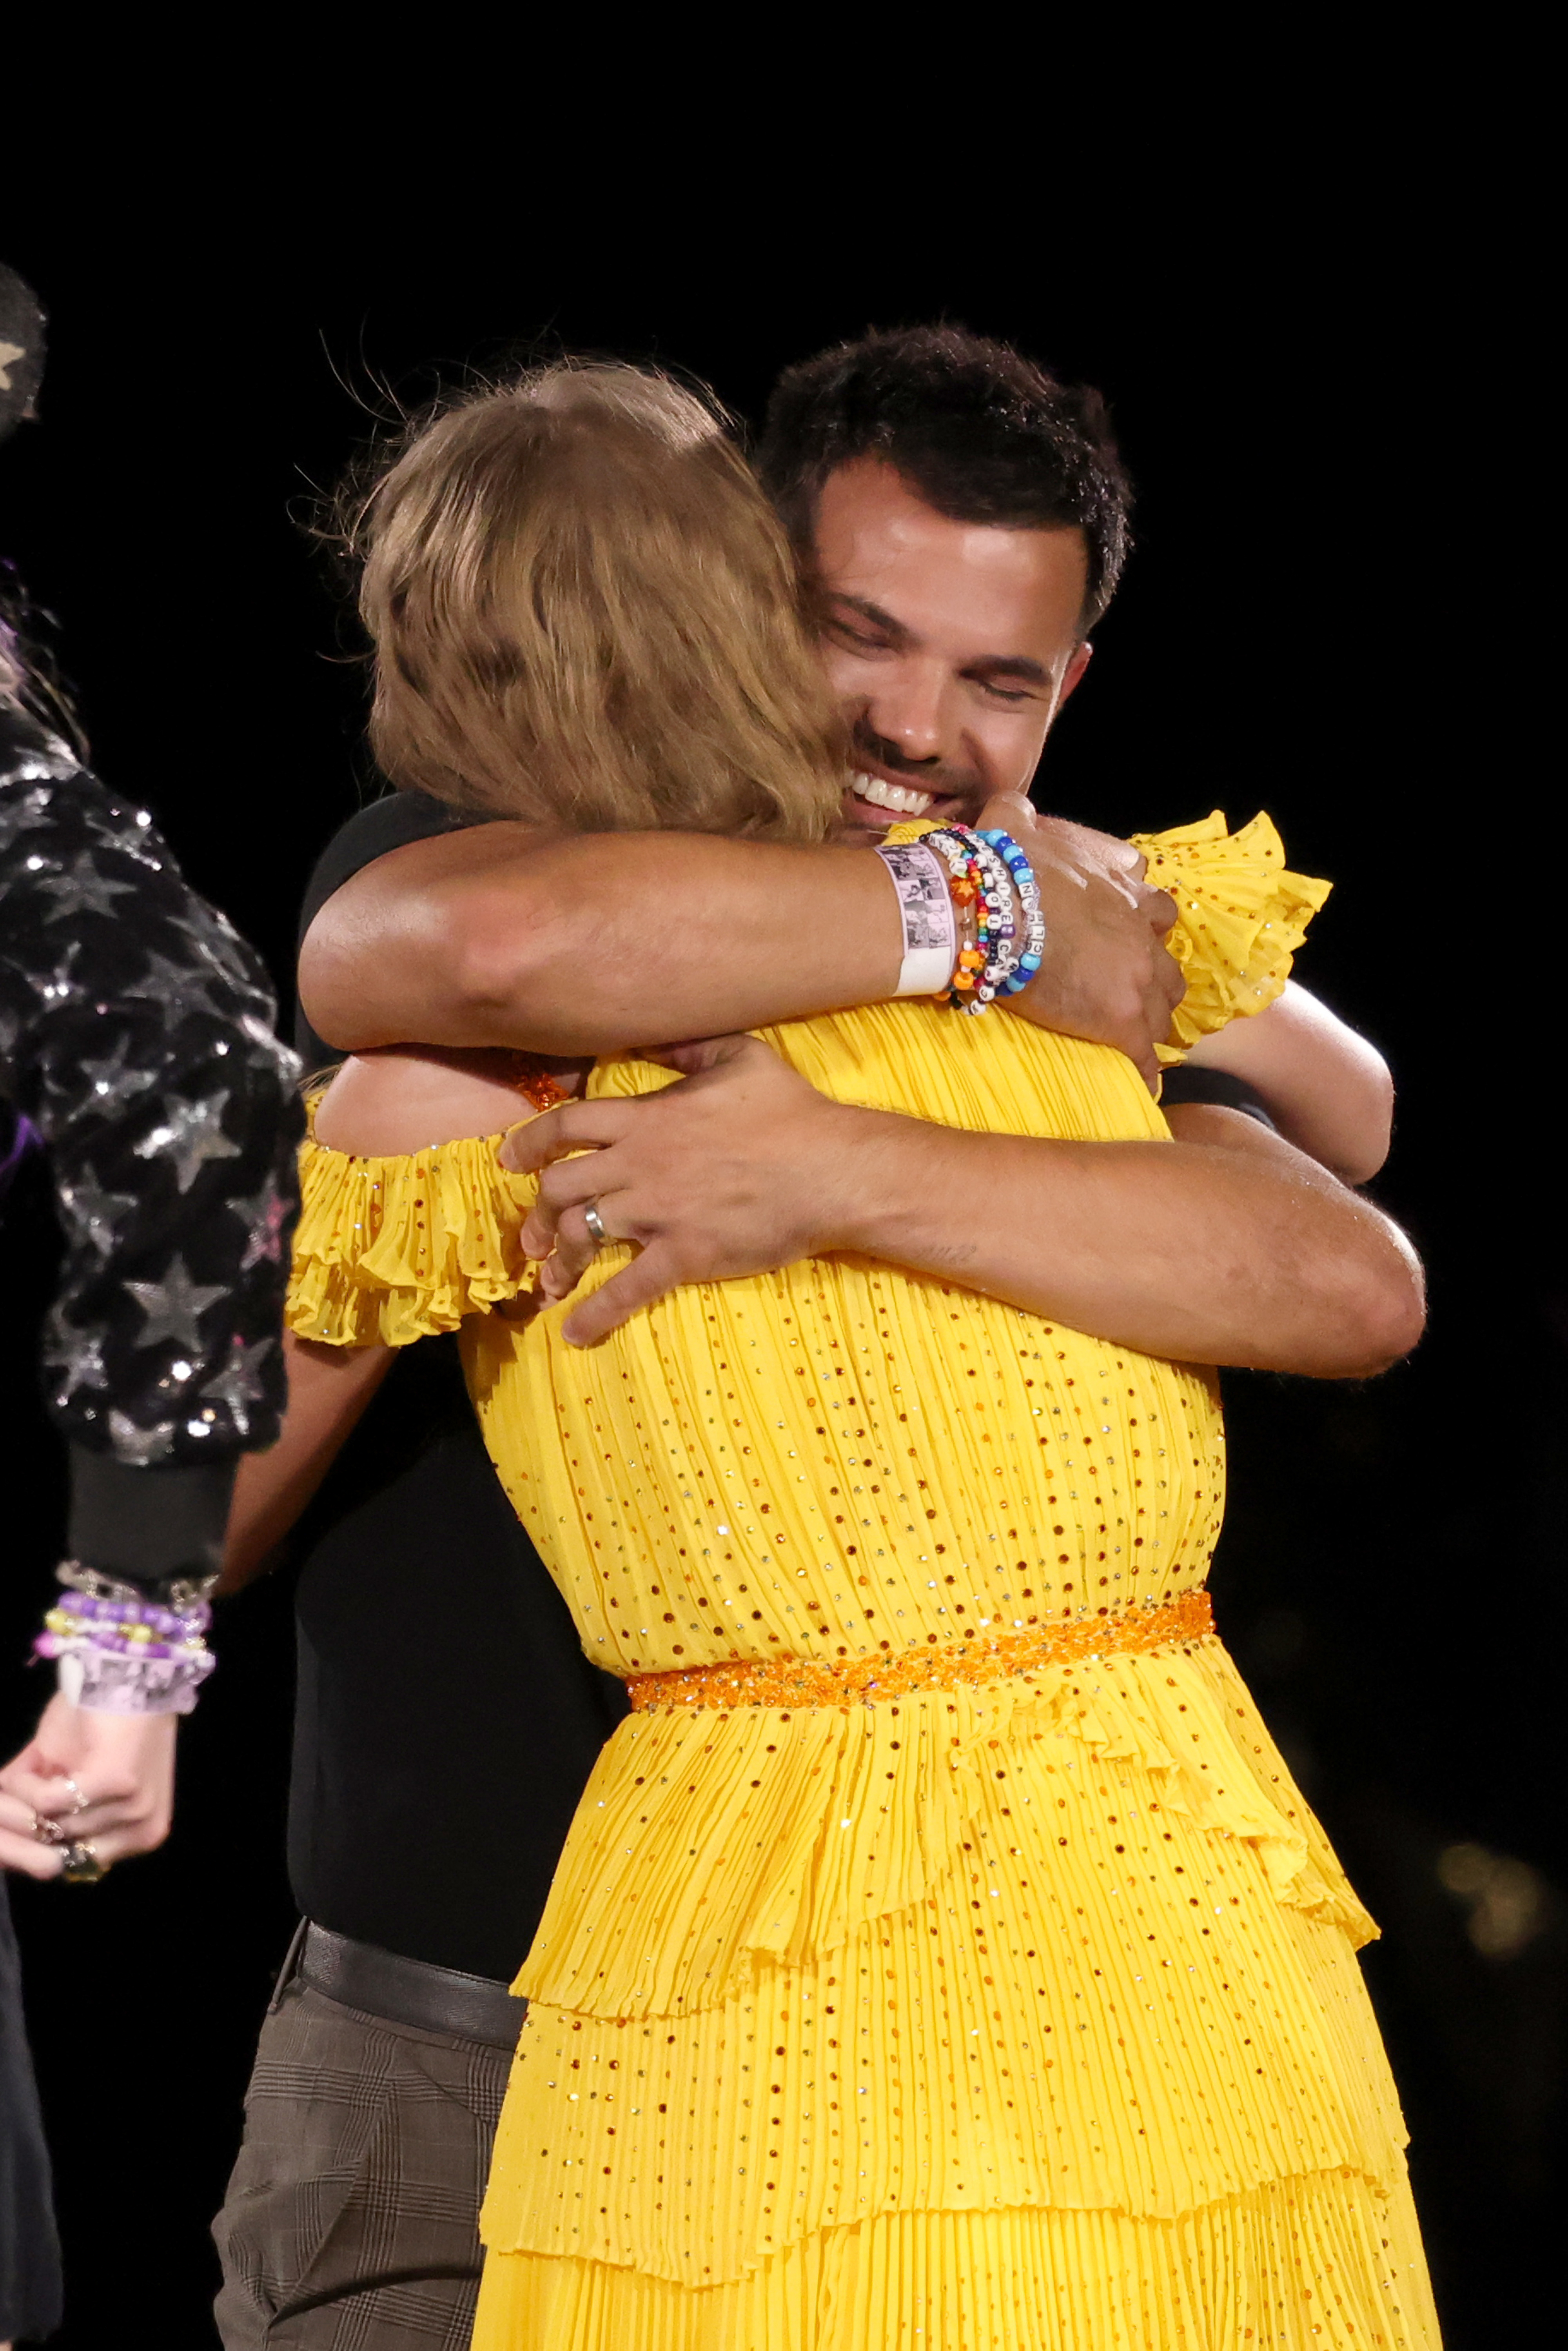 Taylor and Taylor hugging